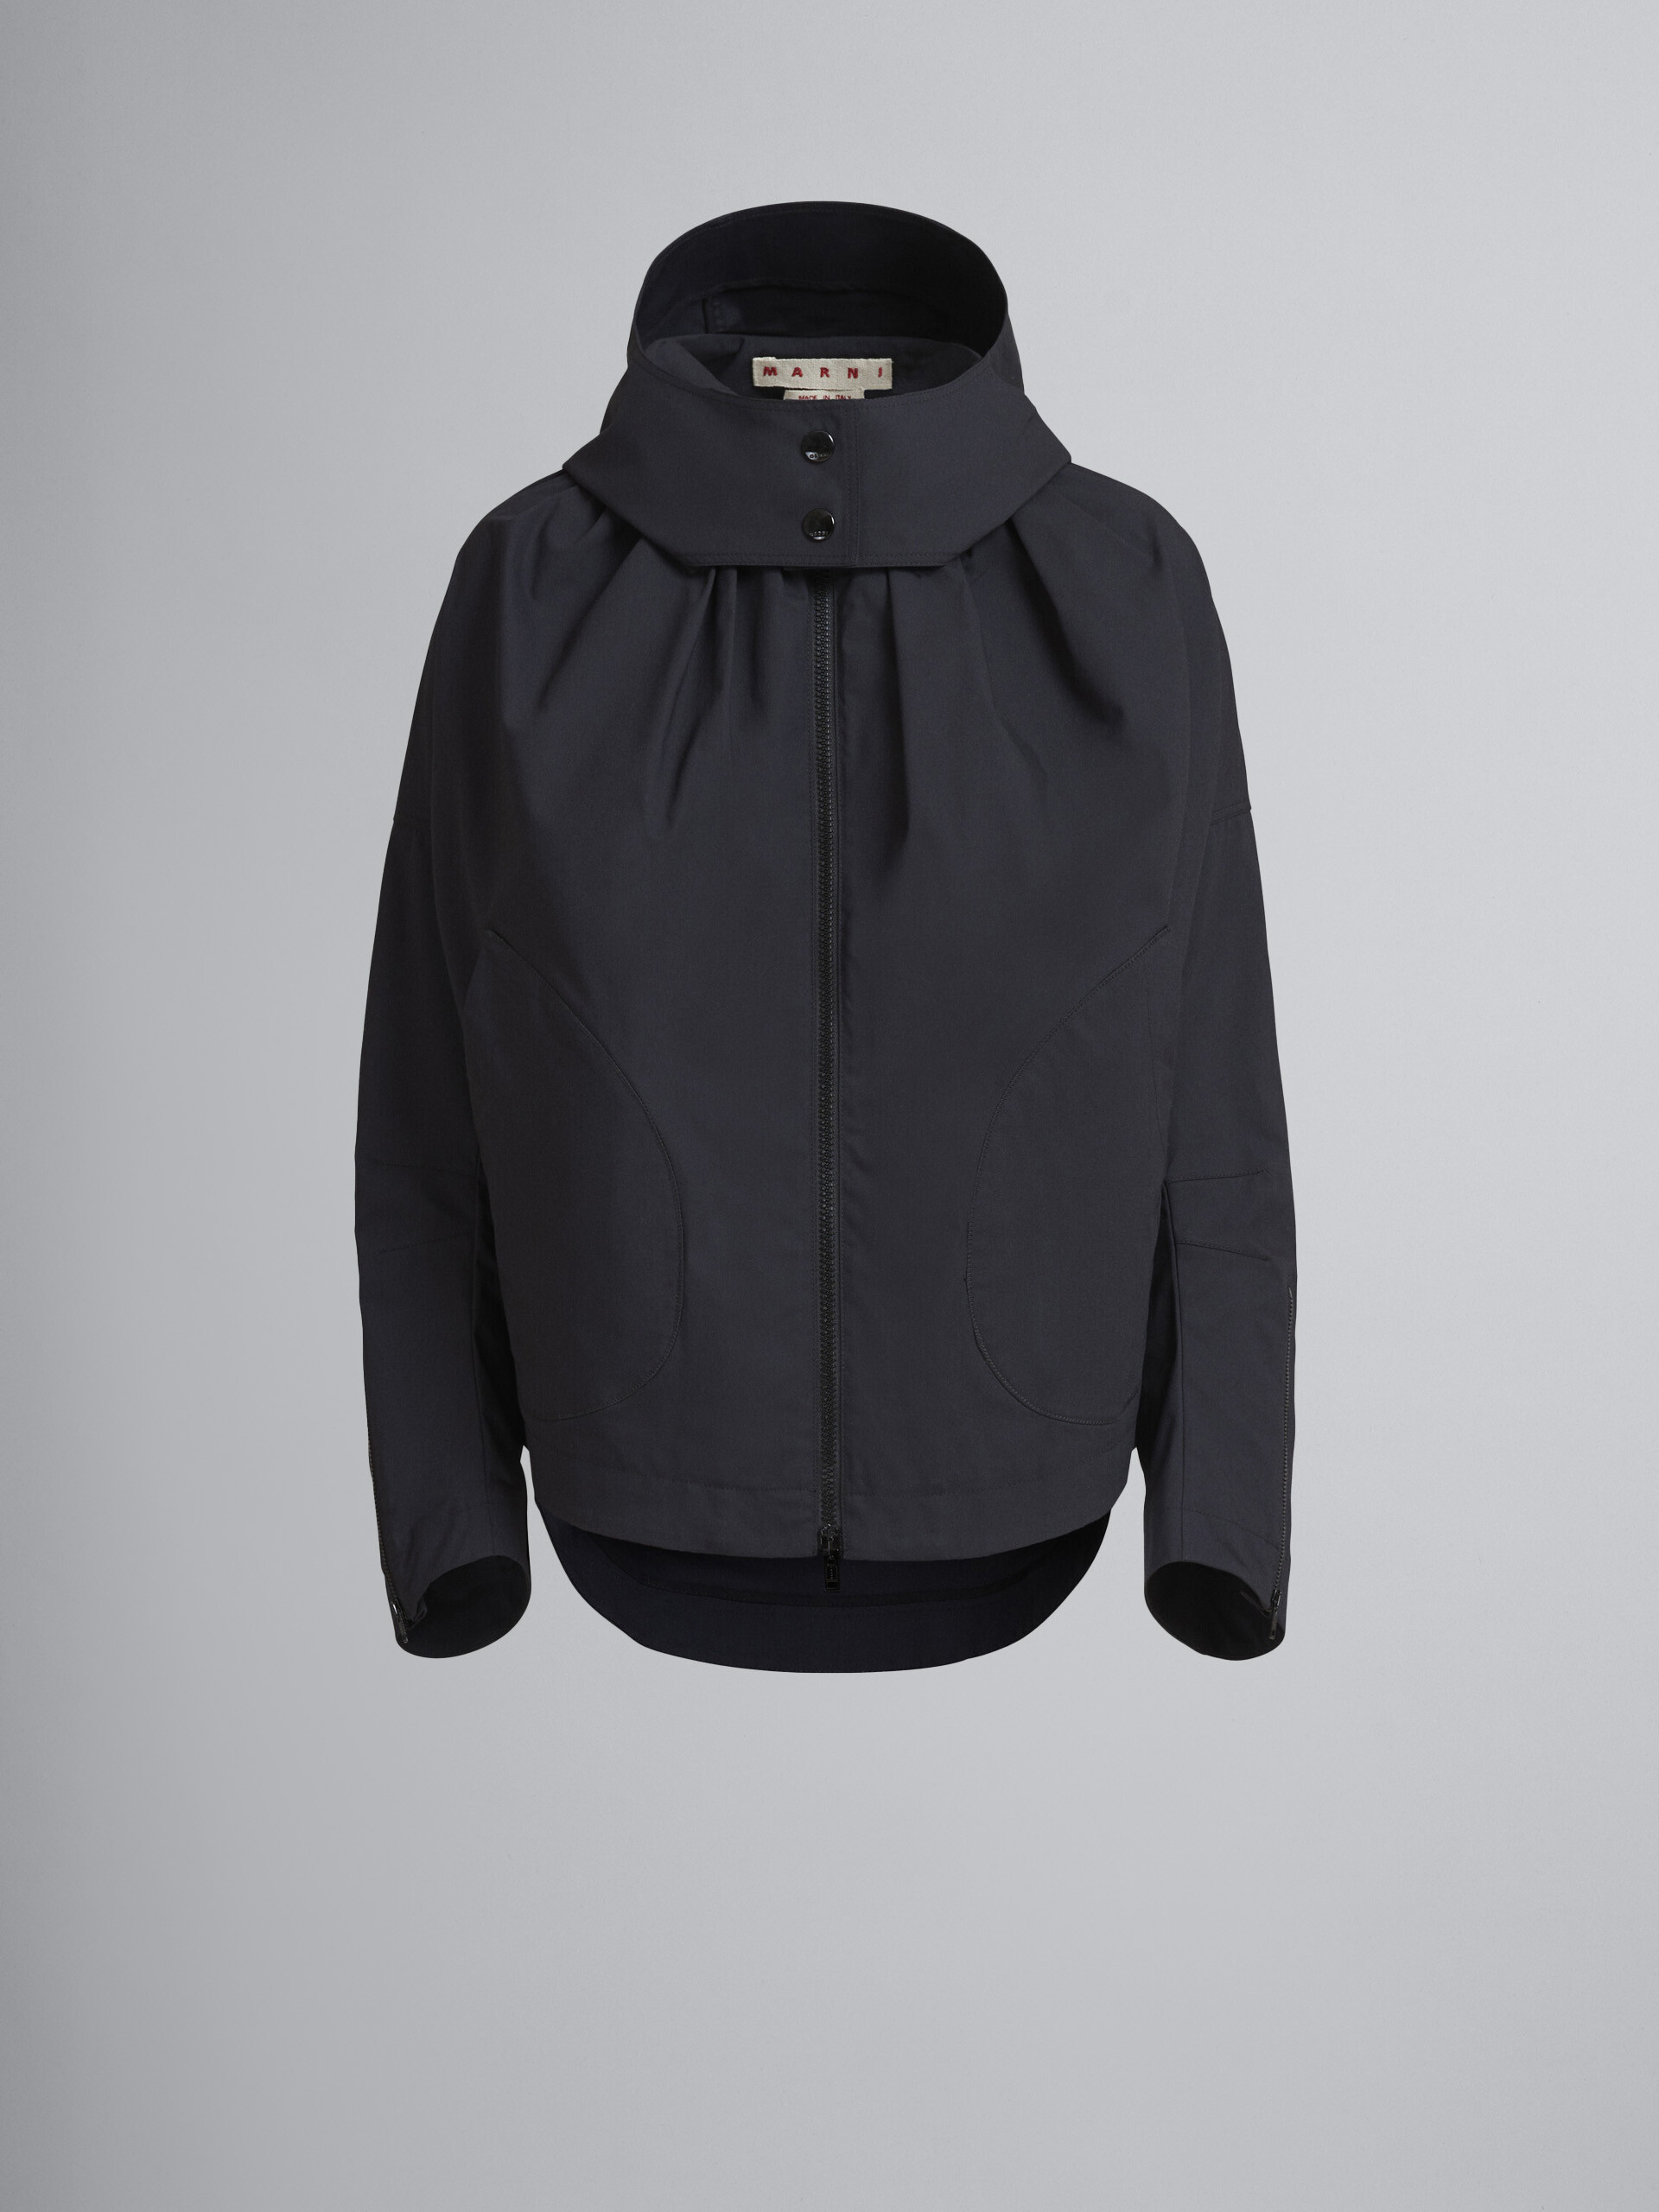 Technical cotton jacket with kimono sleeves and hood - Jackets - Image 1